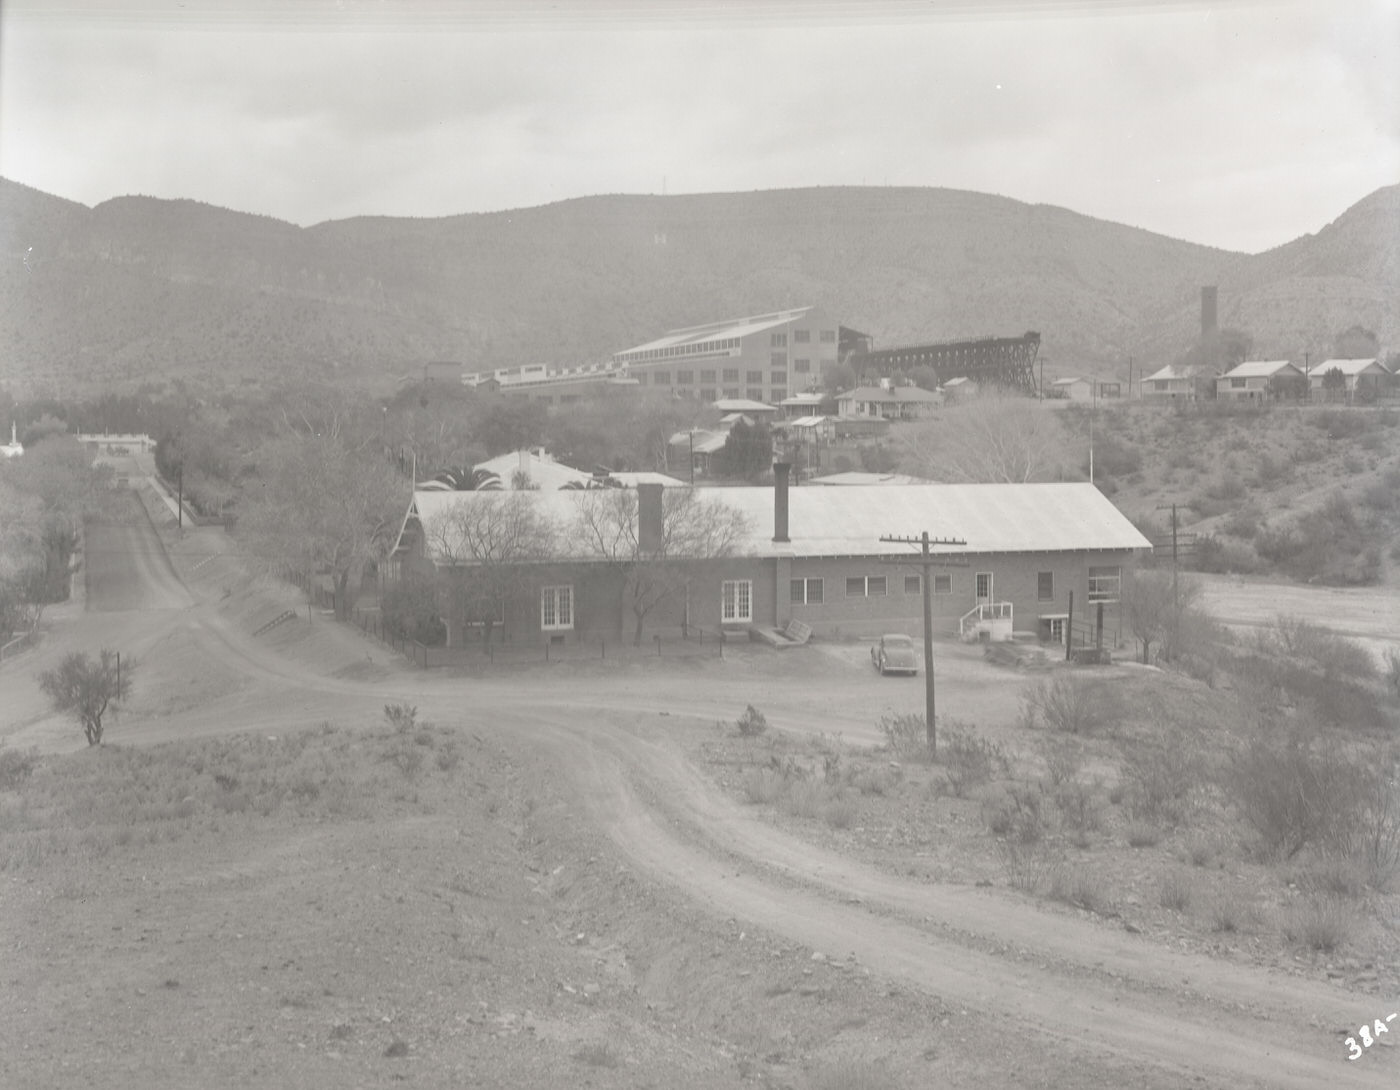 Home and Mill in Hayden, Arizona, 1930s